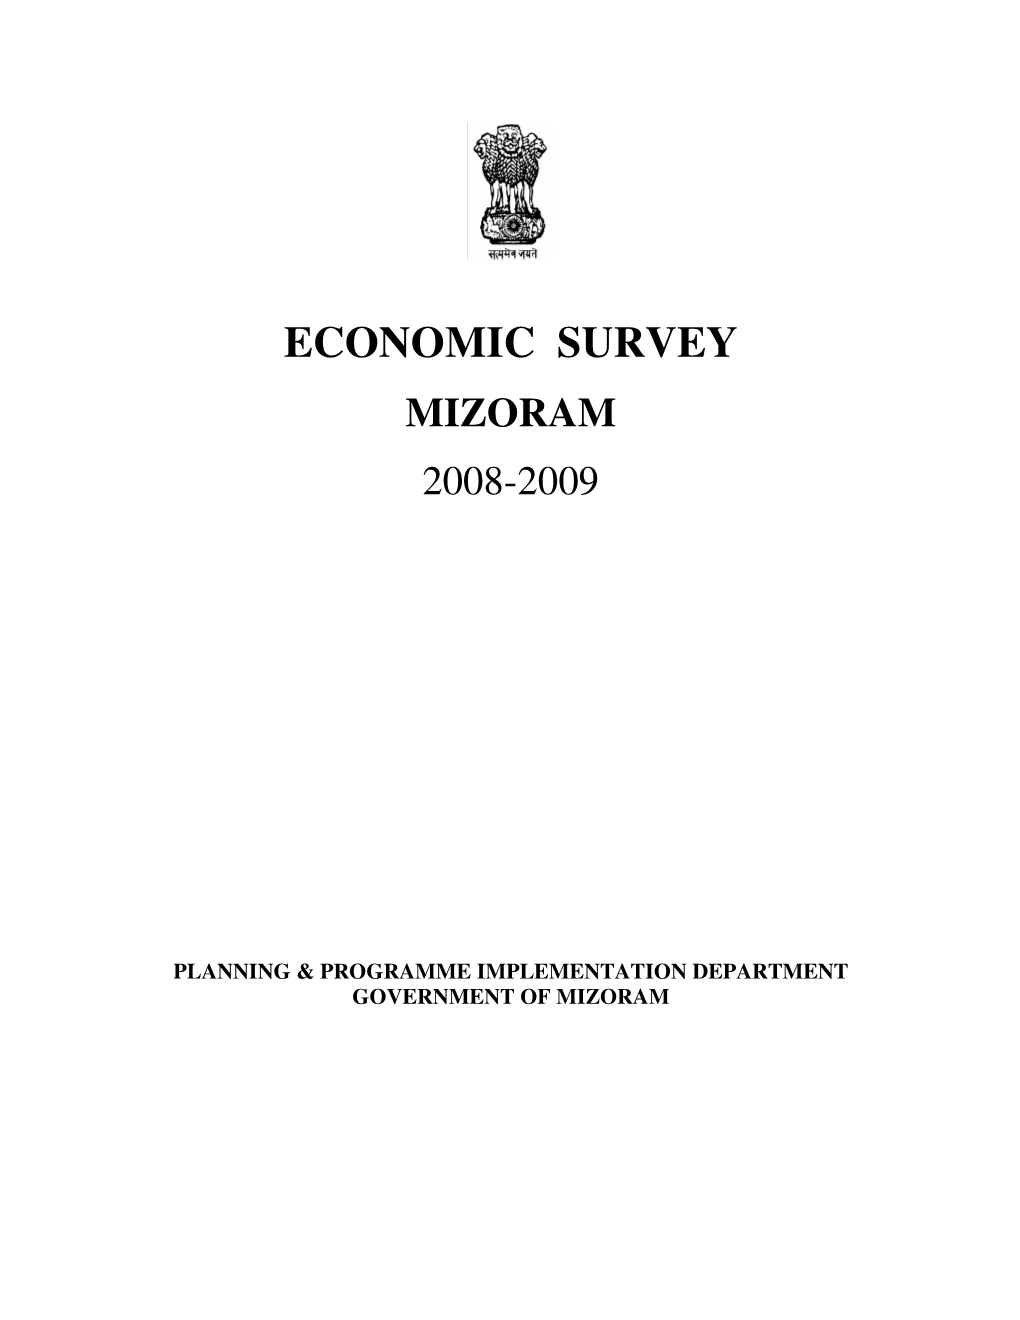 Economic Survey 2008-09